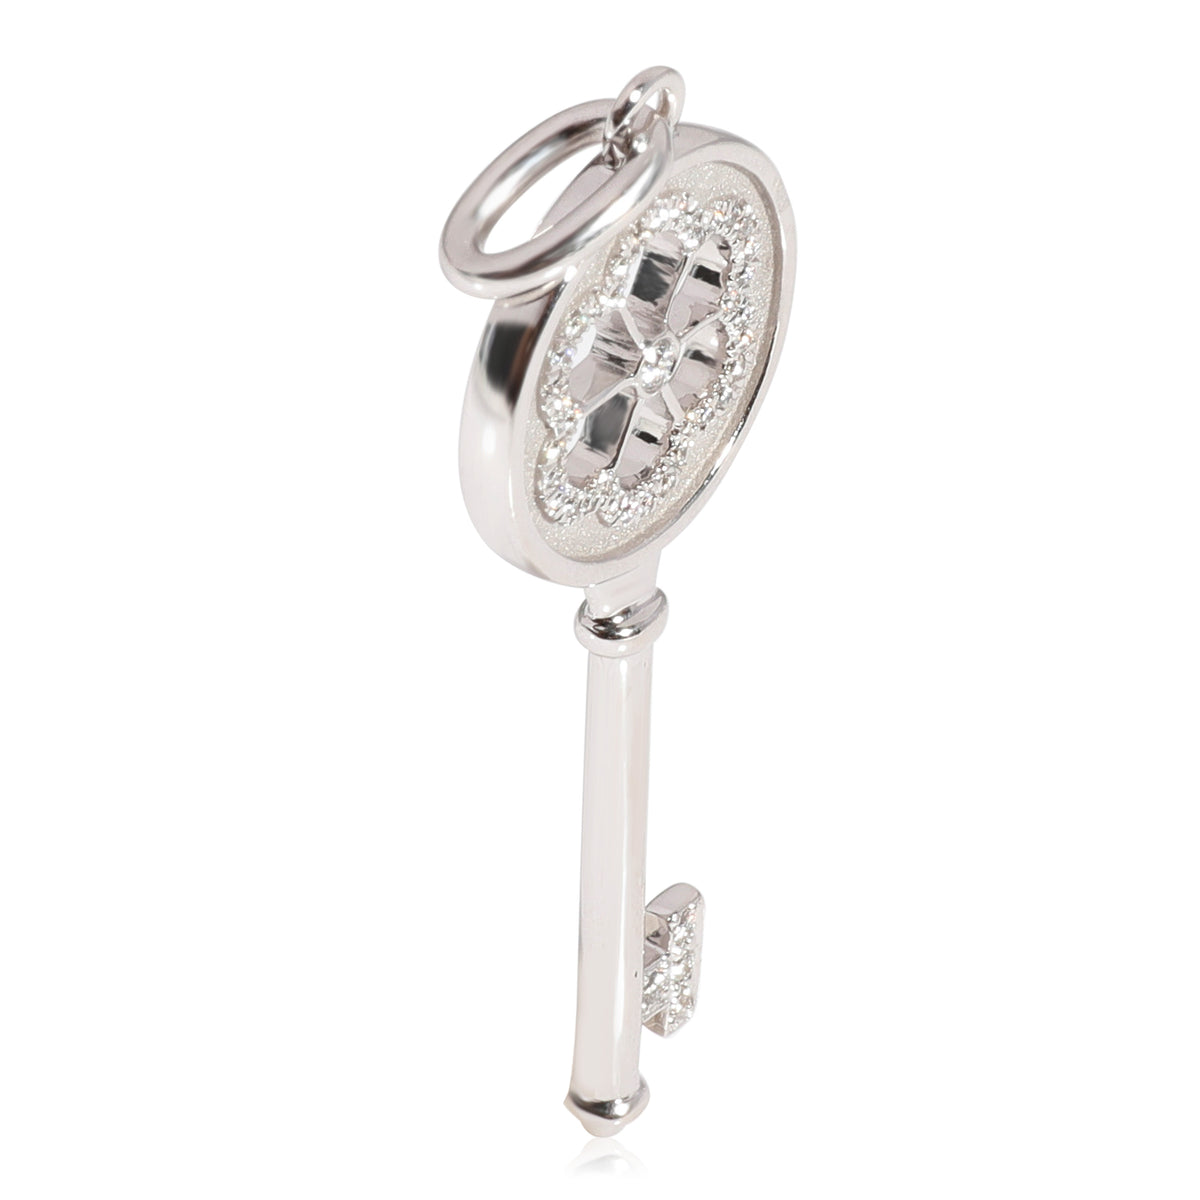 Tiffany & Co. Blossom Key Diamond Fashion Pendant in 18k White Gold 0.10 CTW